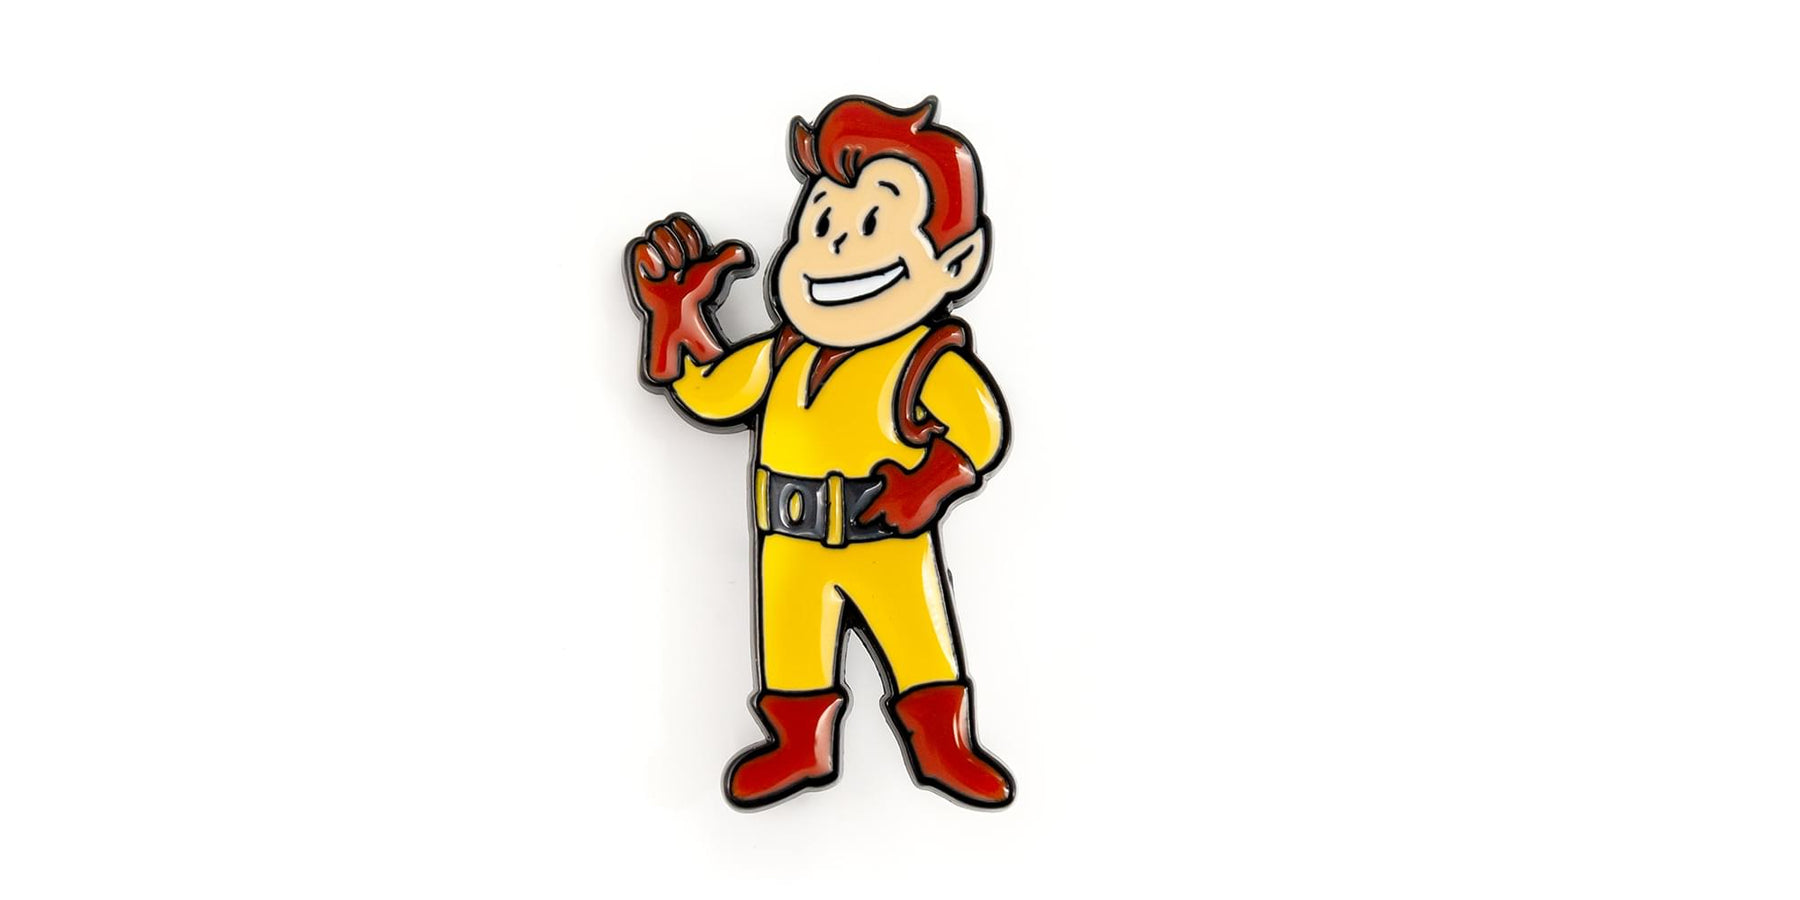 Fallout Pip-Boy Original Character Pin | Exclusive Retro Enamel Collector Pin